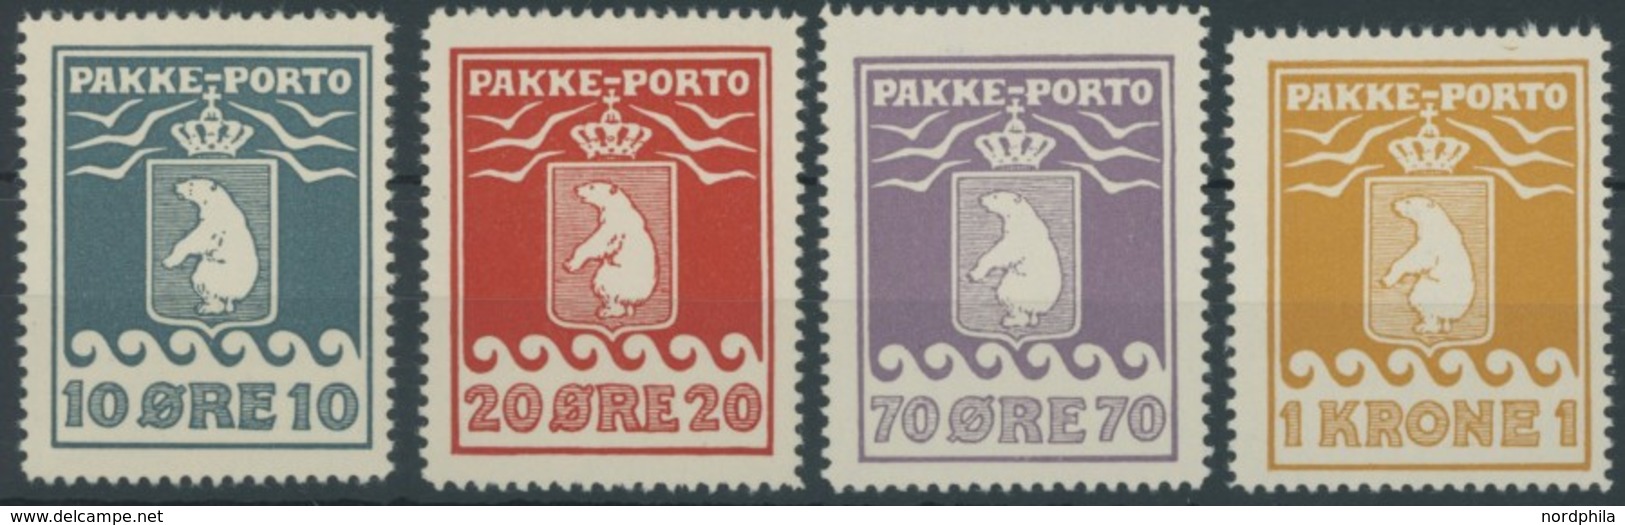 GRÖNLAND - PAKKE-PORTO 7-11B *, 1937, 10 Ø - 1 Kr., Gezähnt L 10 3/4, Falzrest, 4 Prachtwerte - Parcel Post